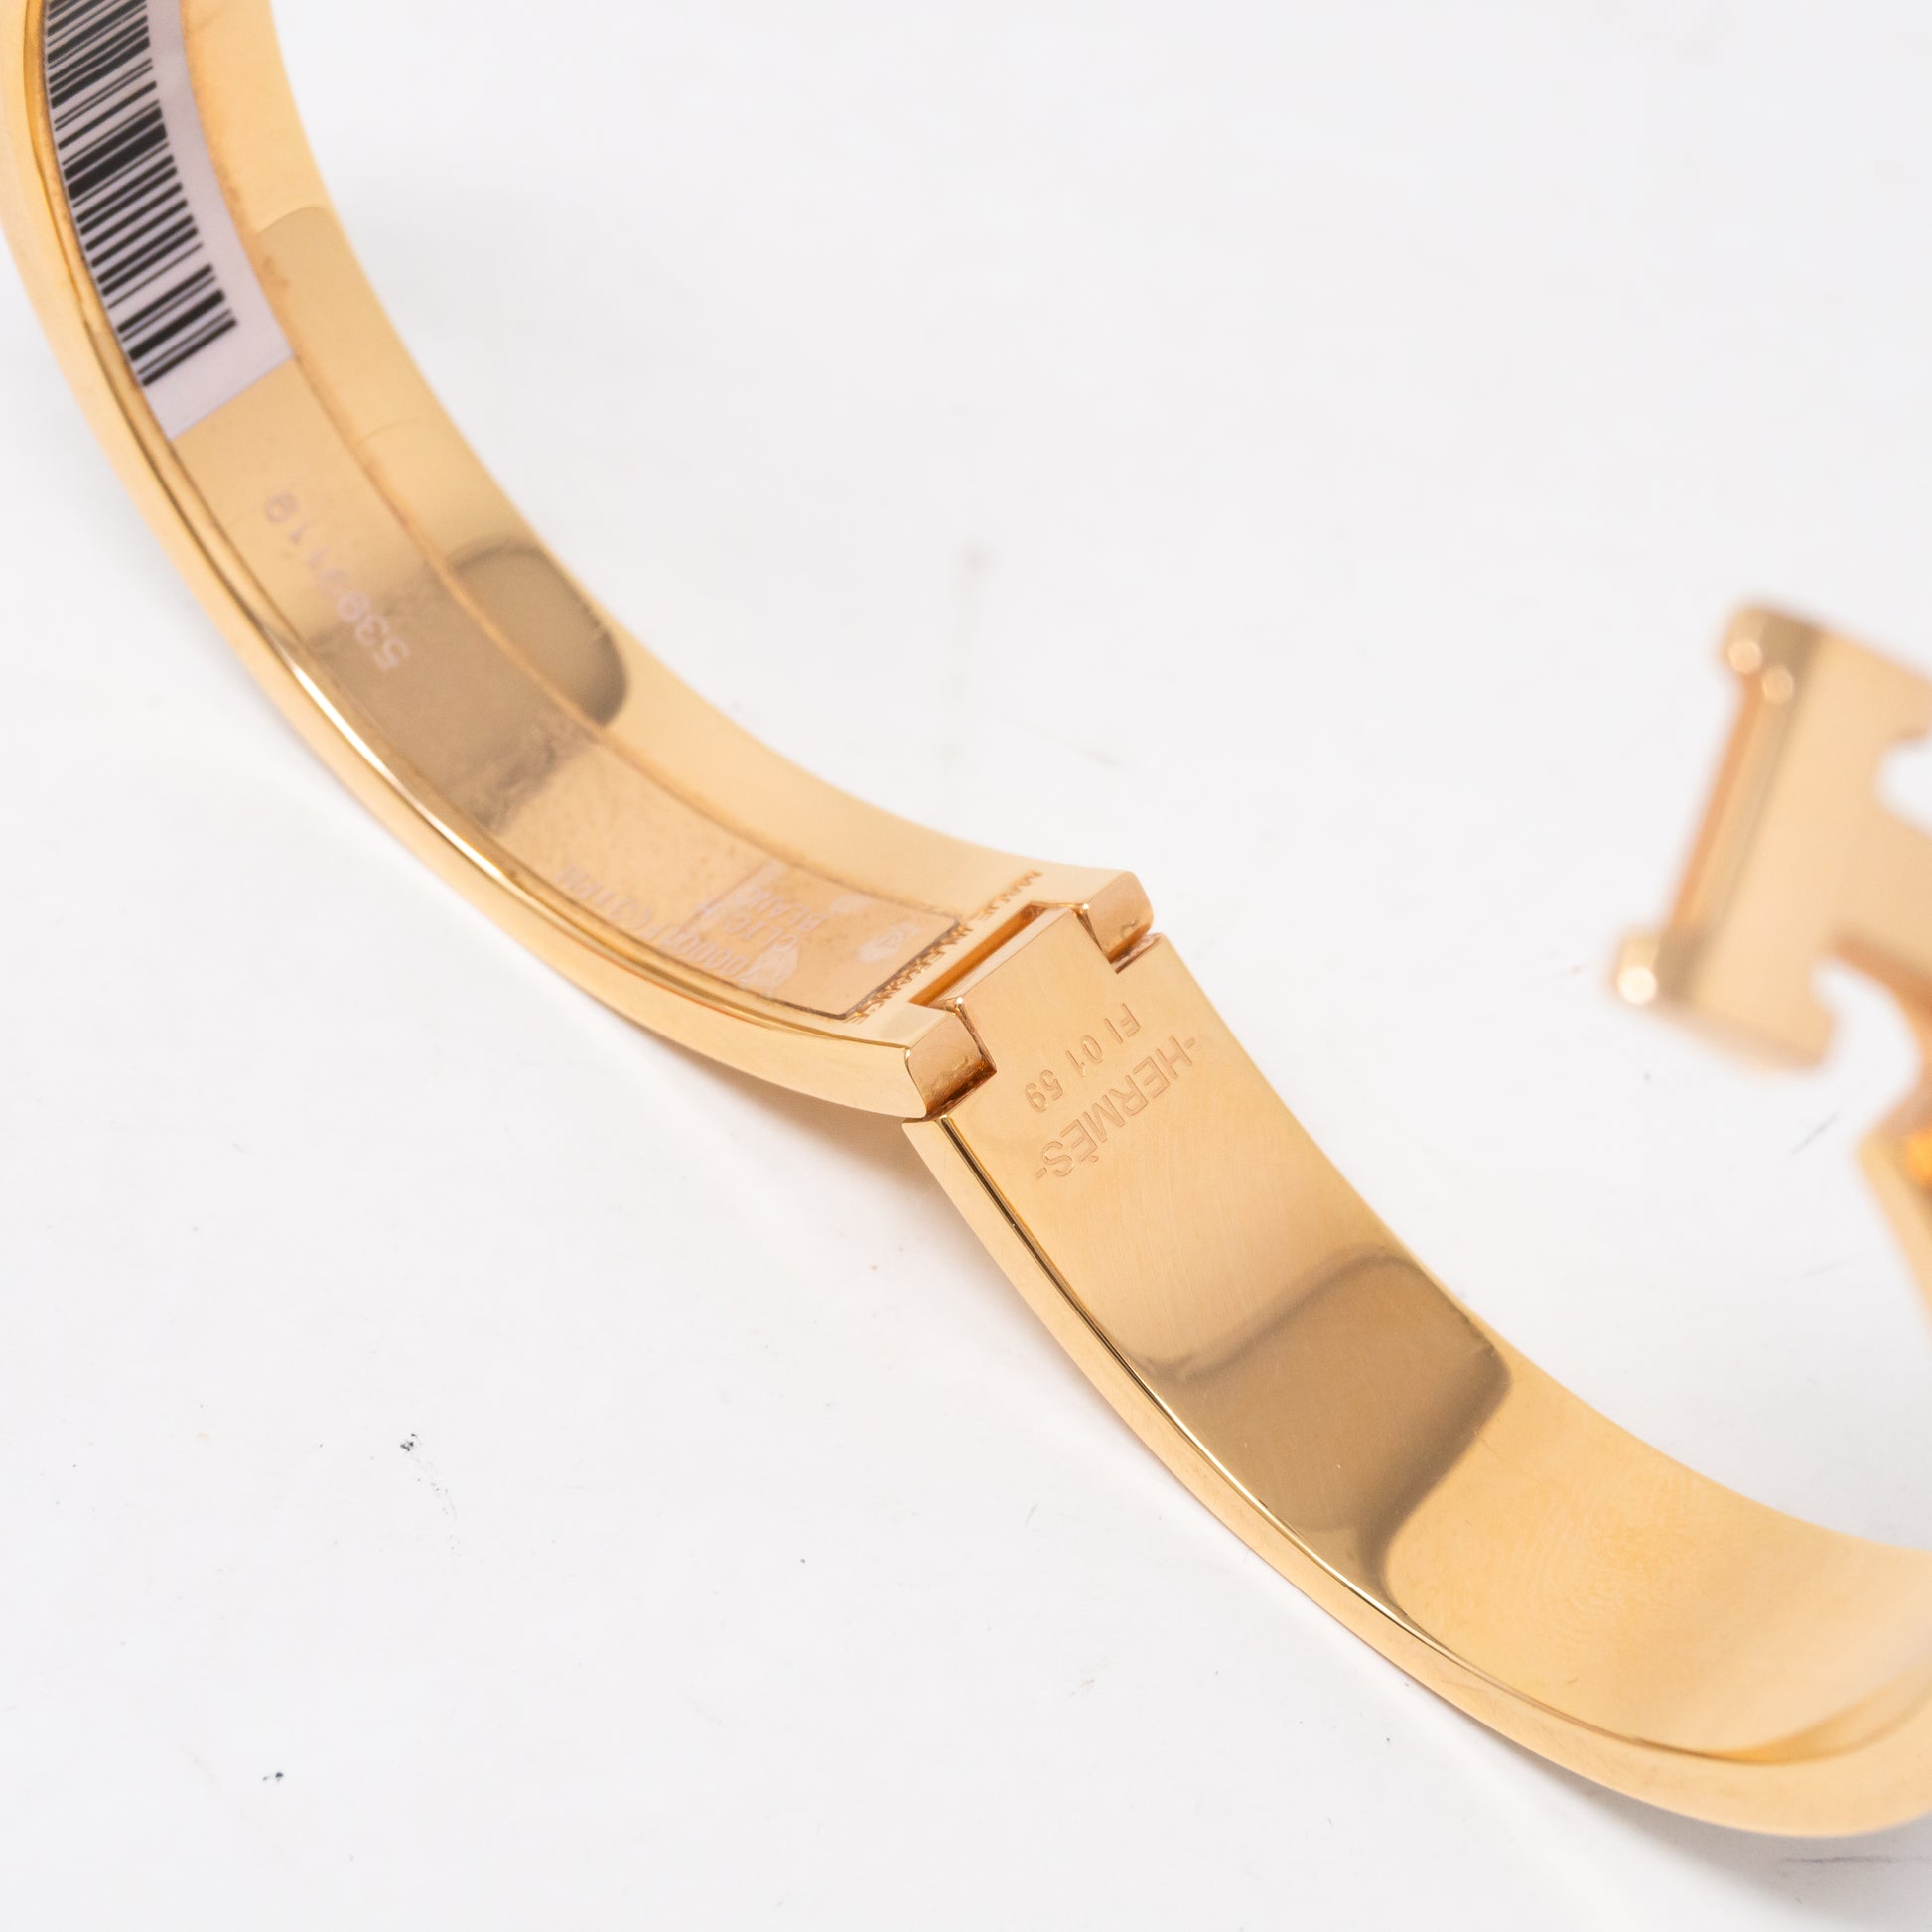 Hermès Clic Clac H Narrow Enamel Bracelet White Rose Gold Hardware – SukiLux